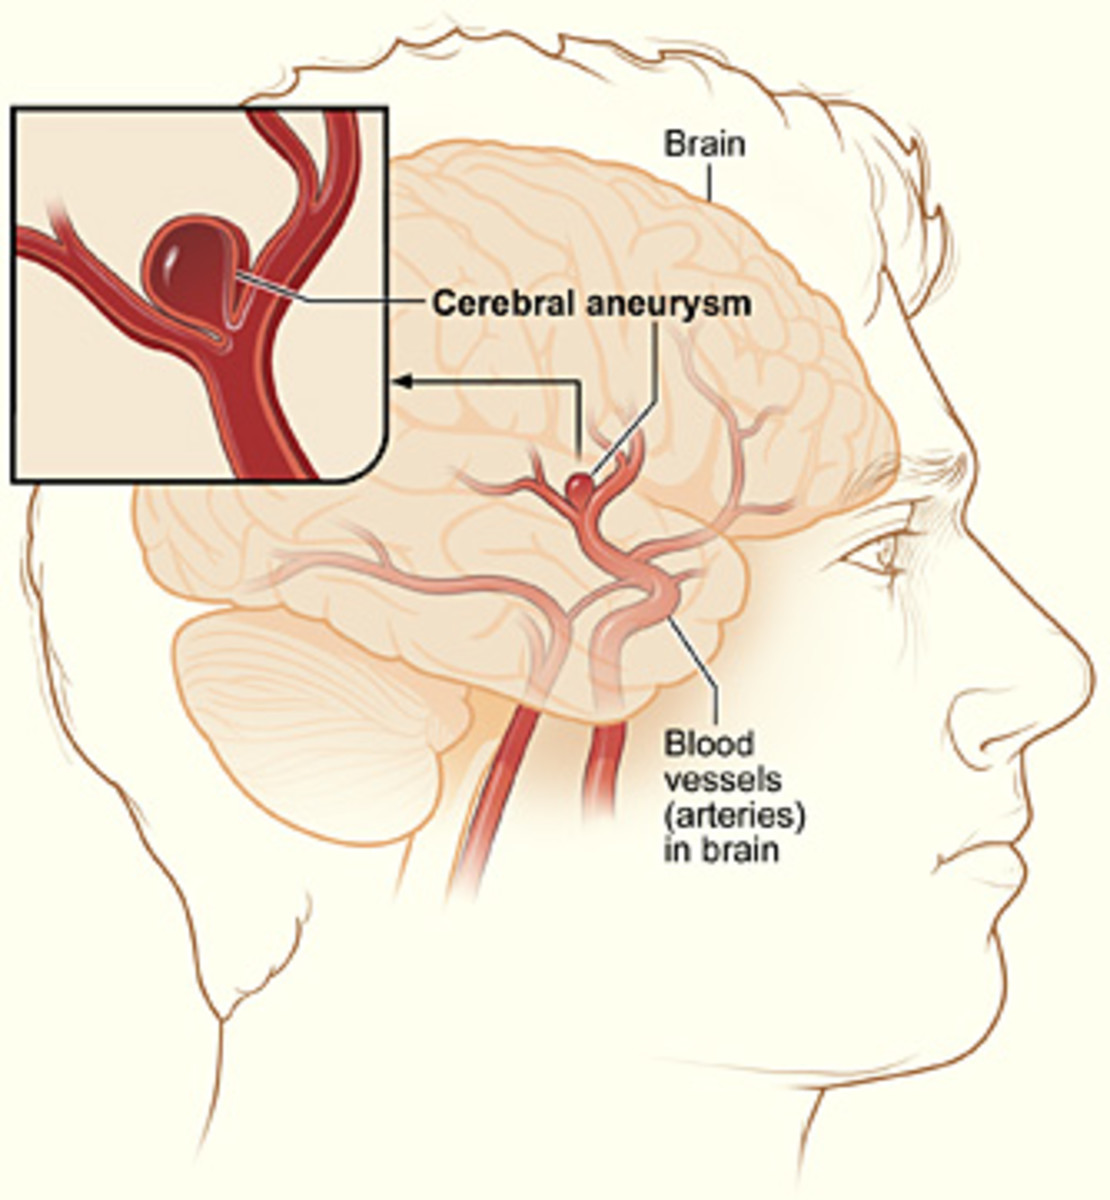 Key Information About Brain Aneurysm